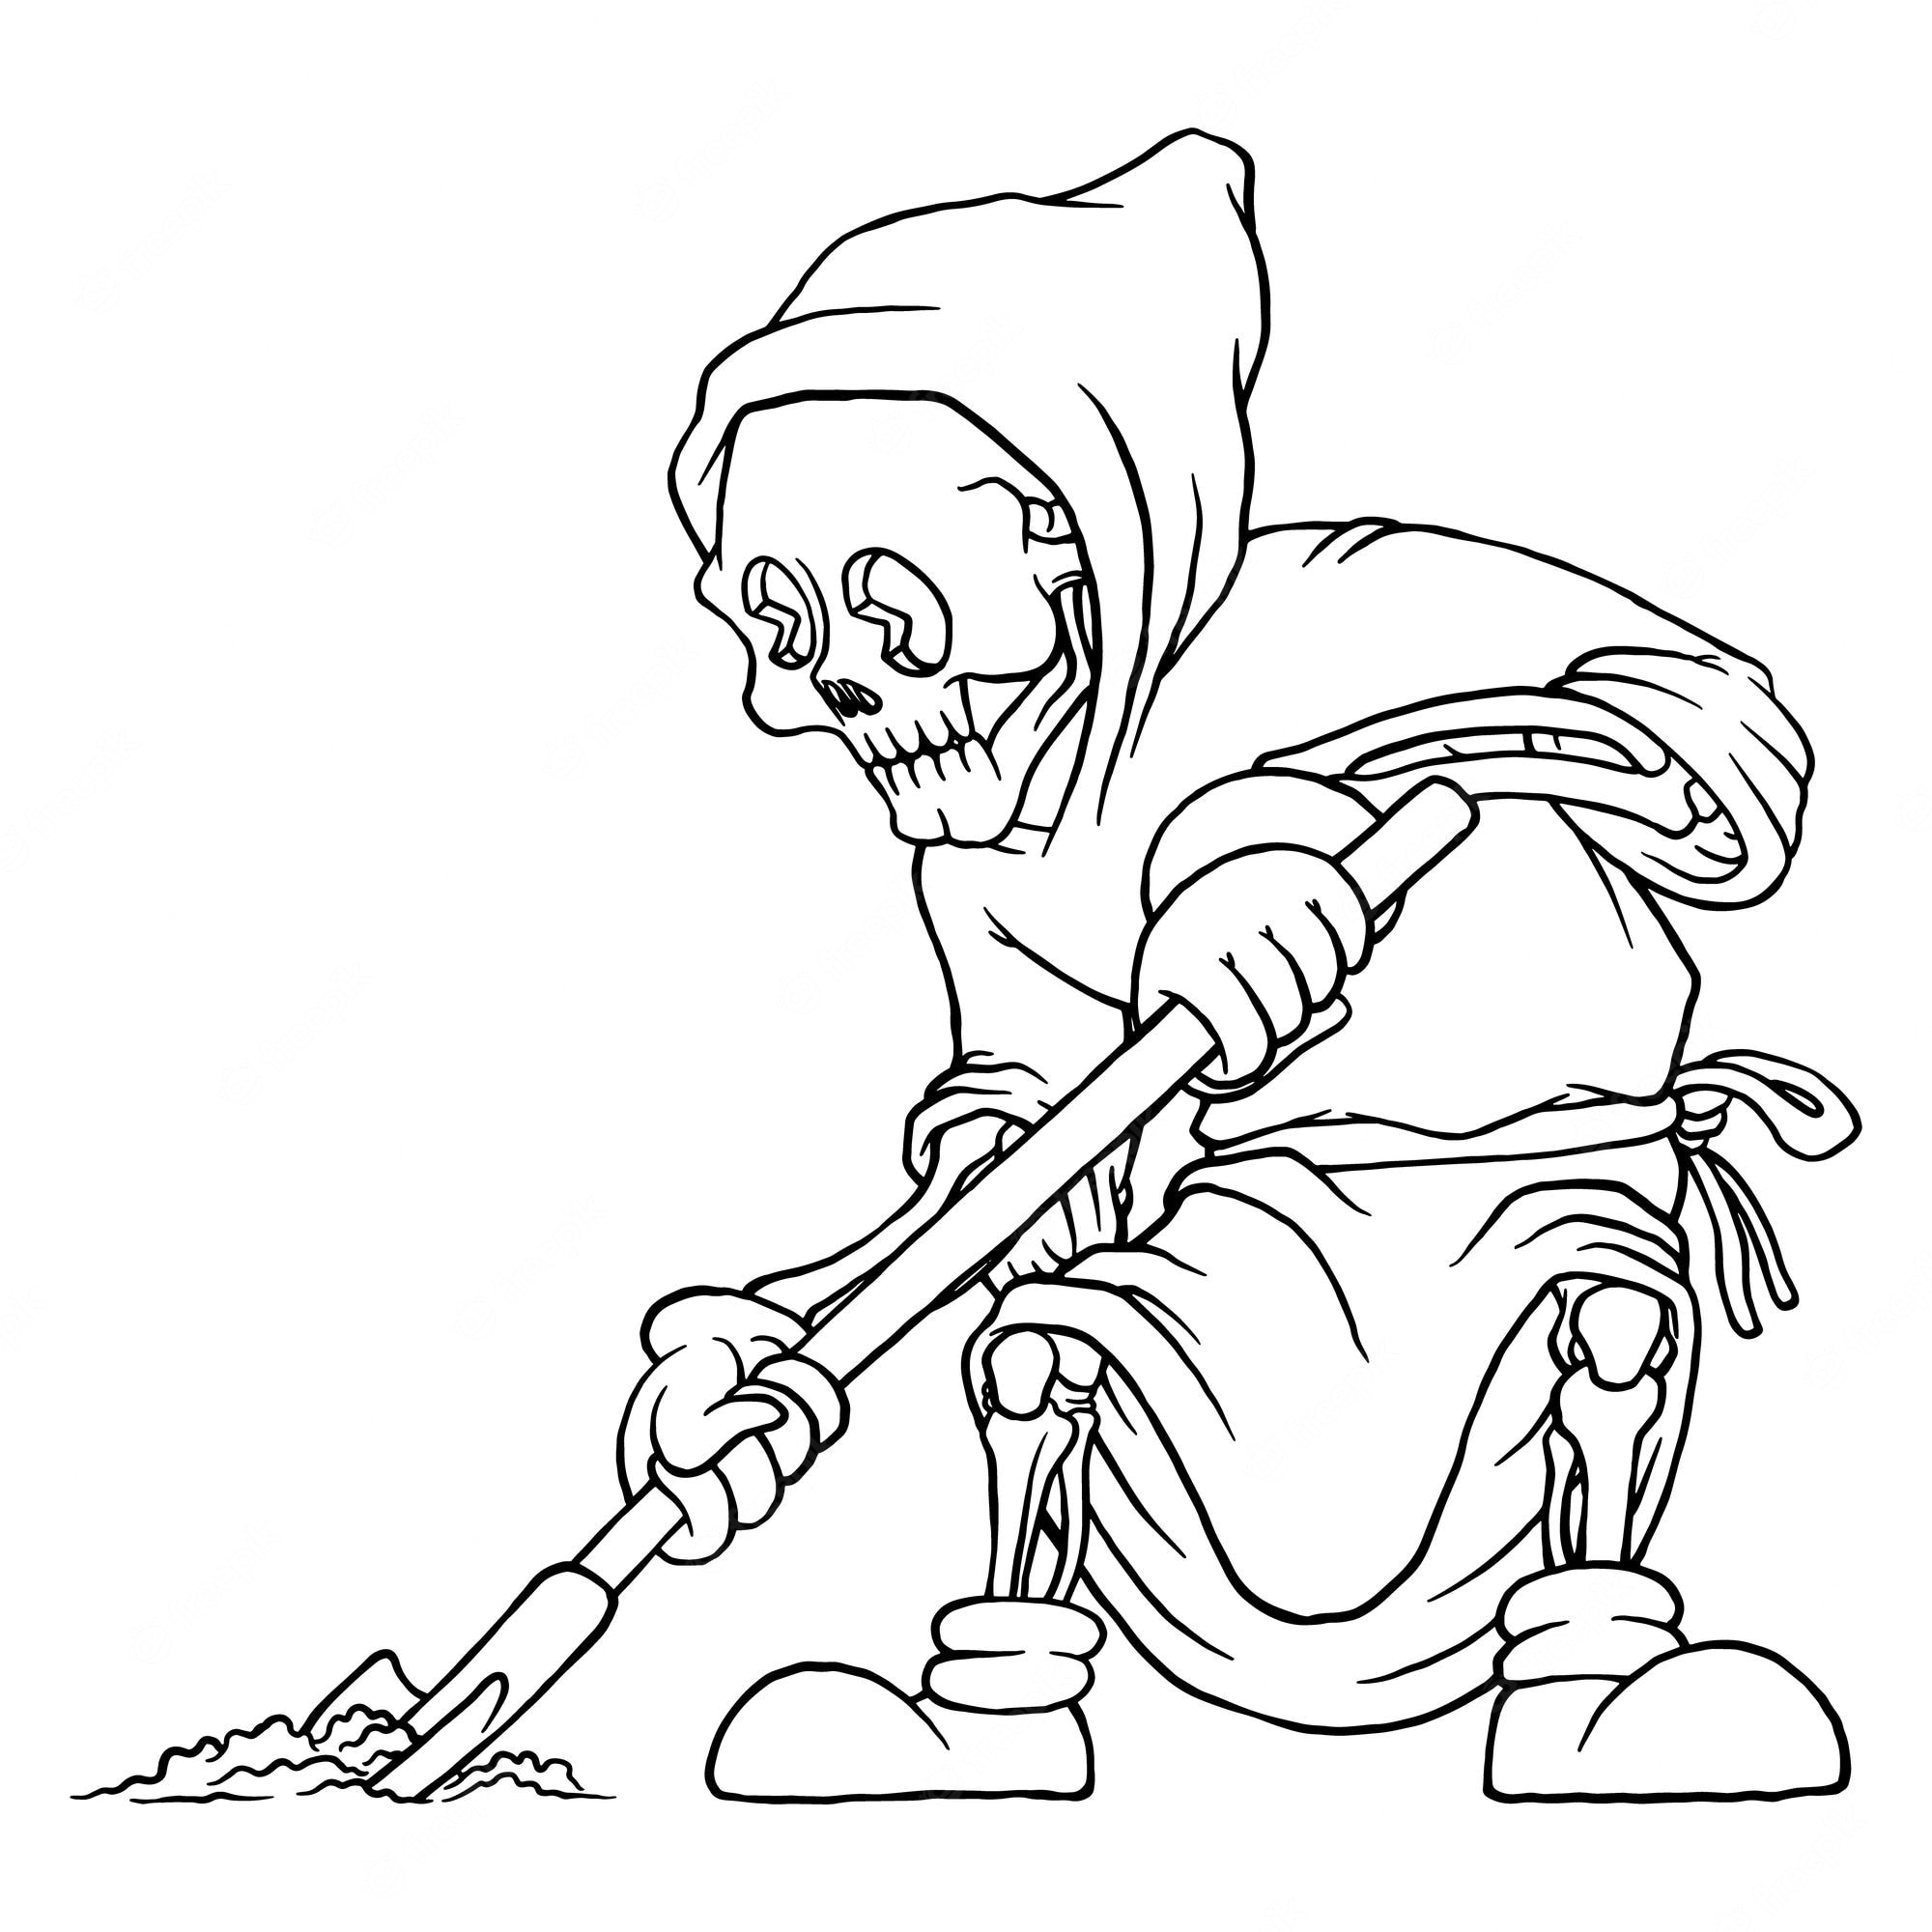 Premium Vector | Coloring illustration of cartoon digging skeleton mascot